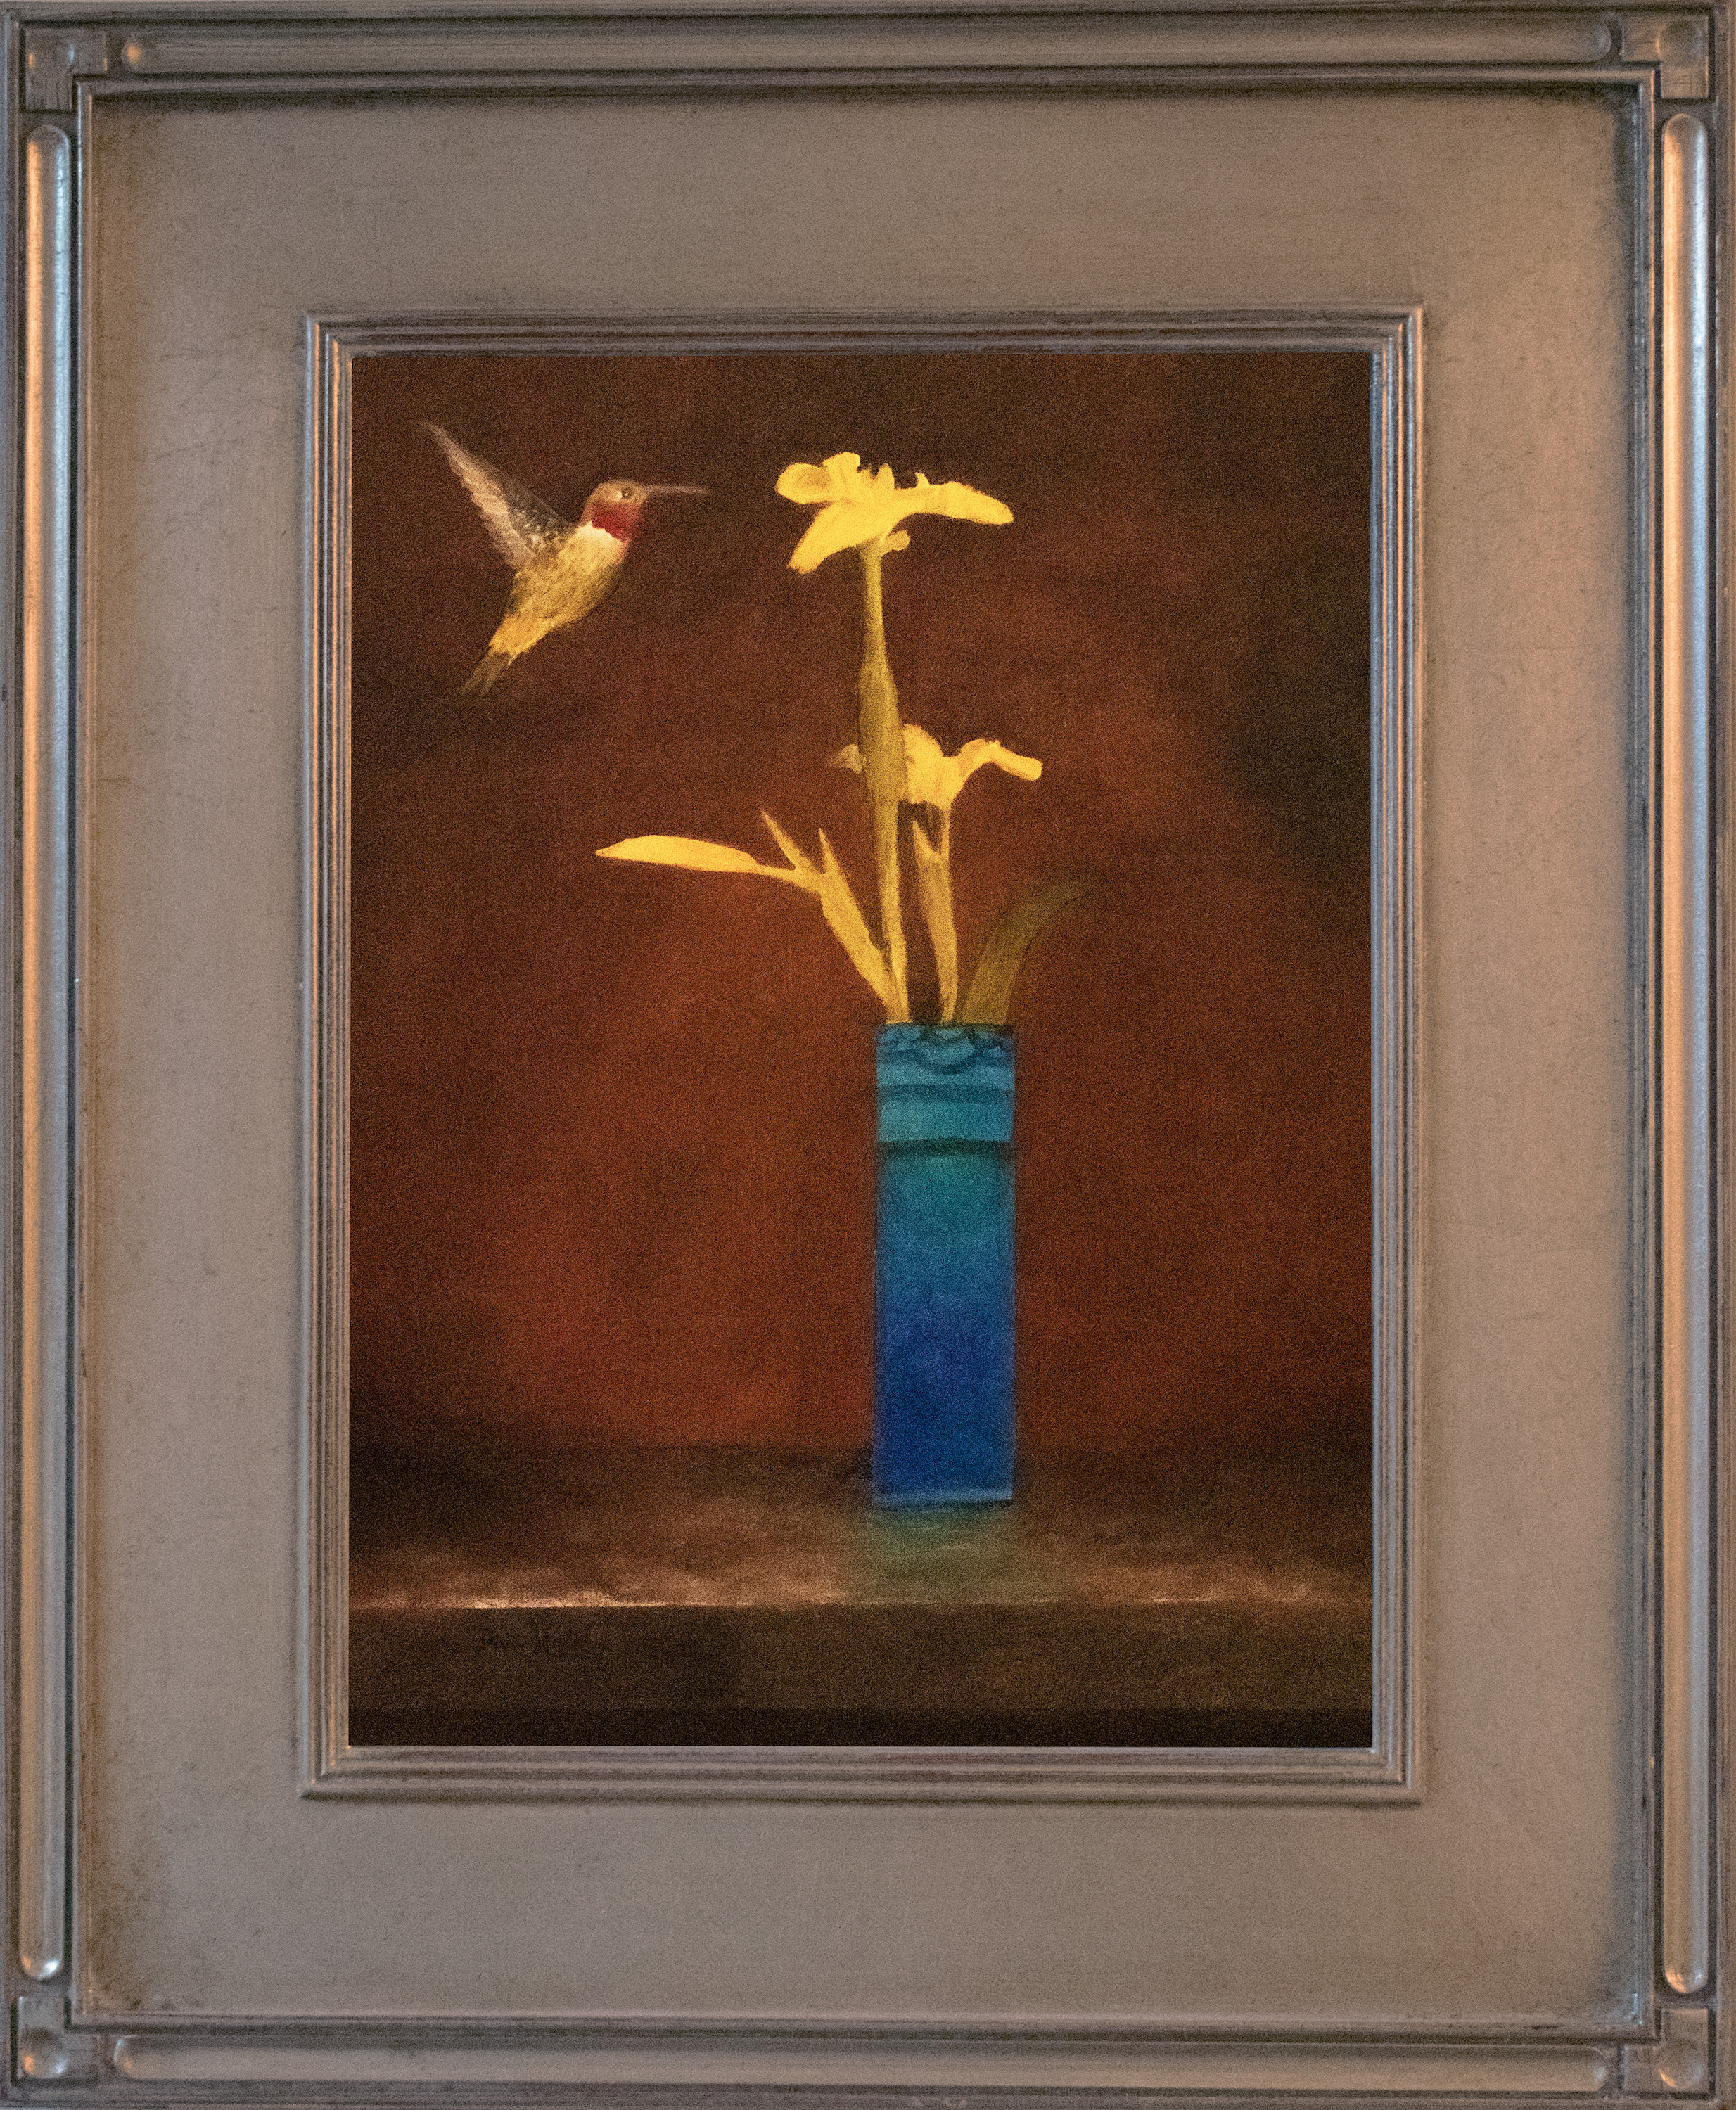 Hummingbird and vase   framed e76afo